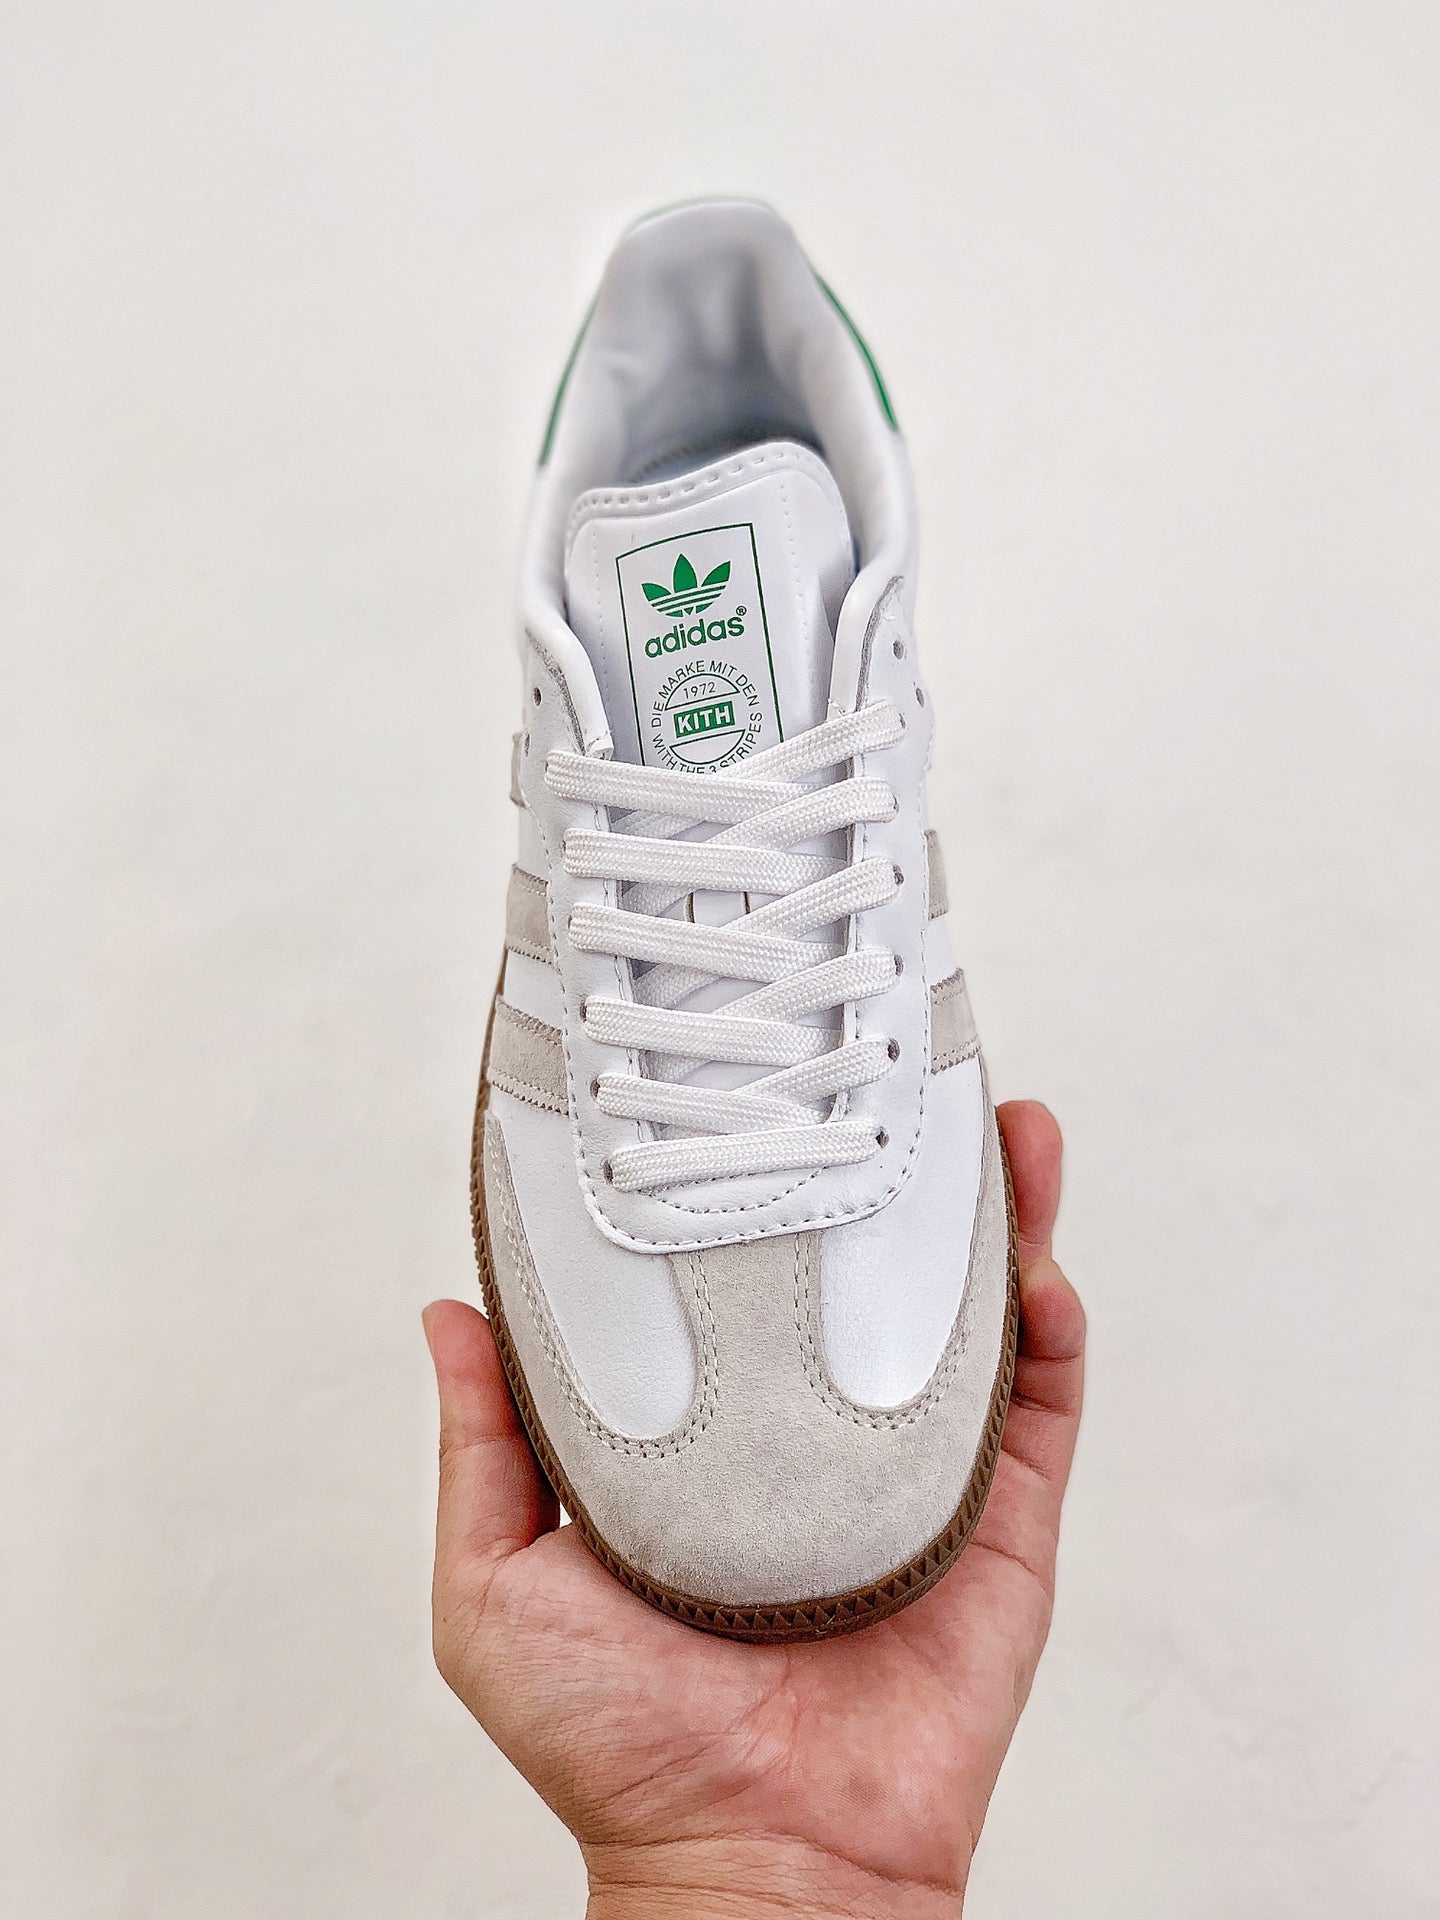 Adidas samba white green shoes